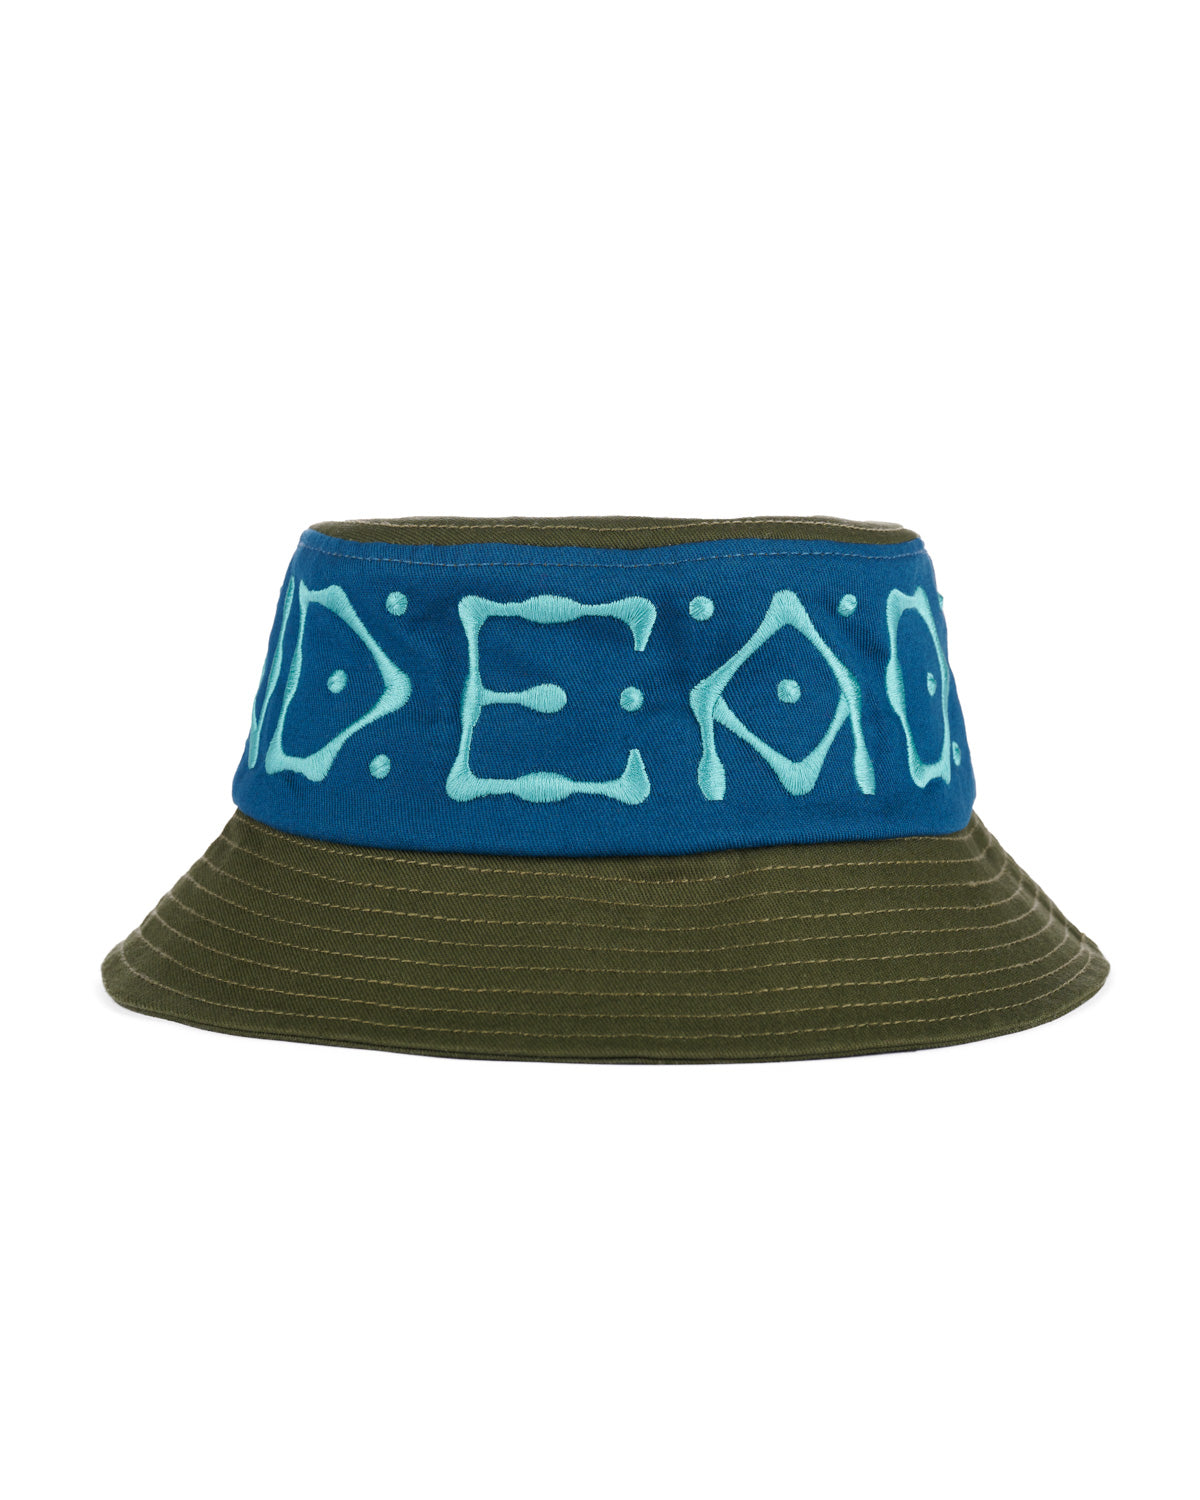 UFO Twill Bucket Hat - Olive 3